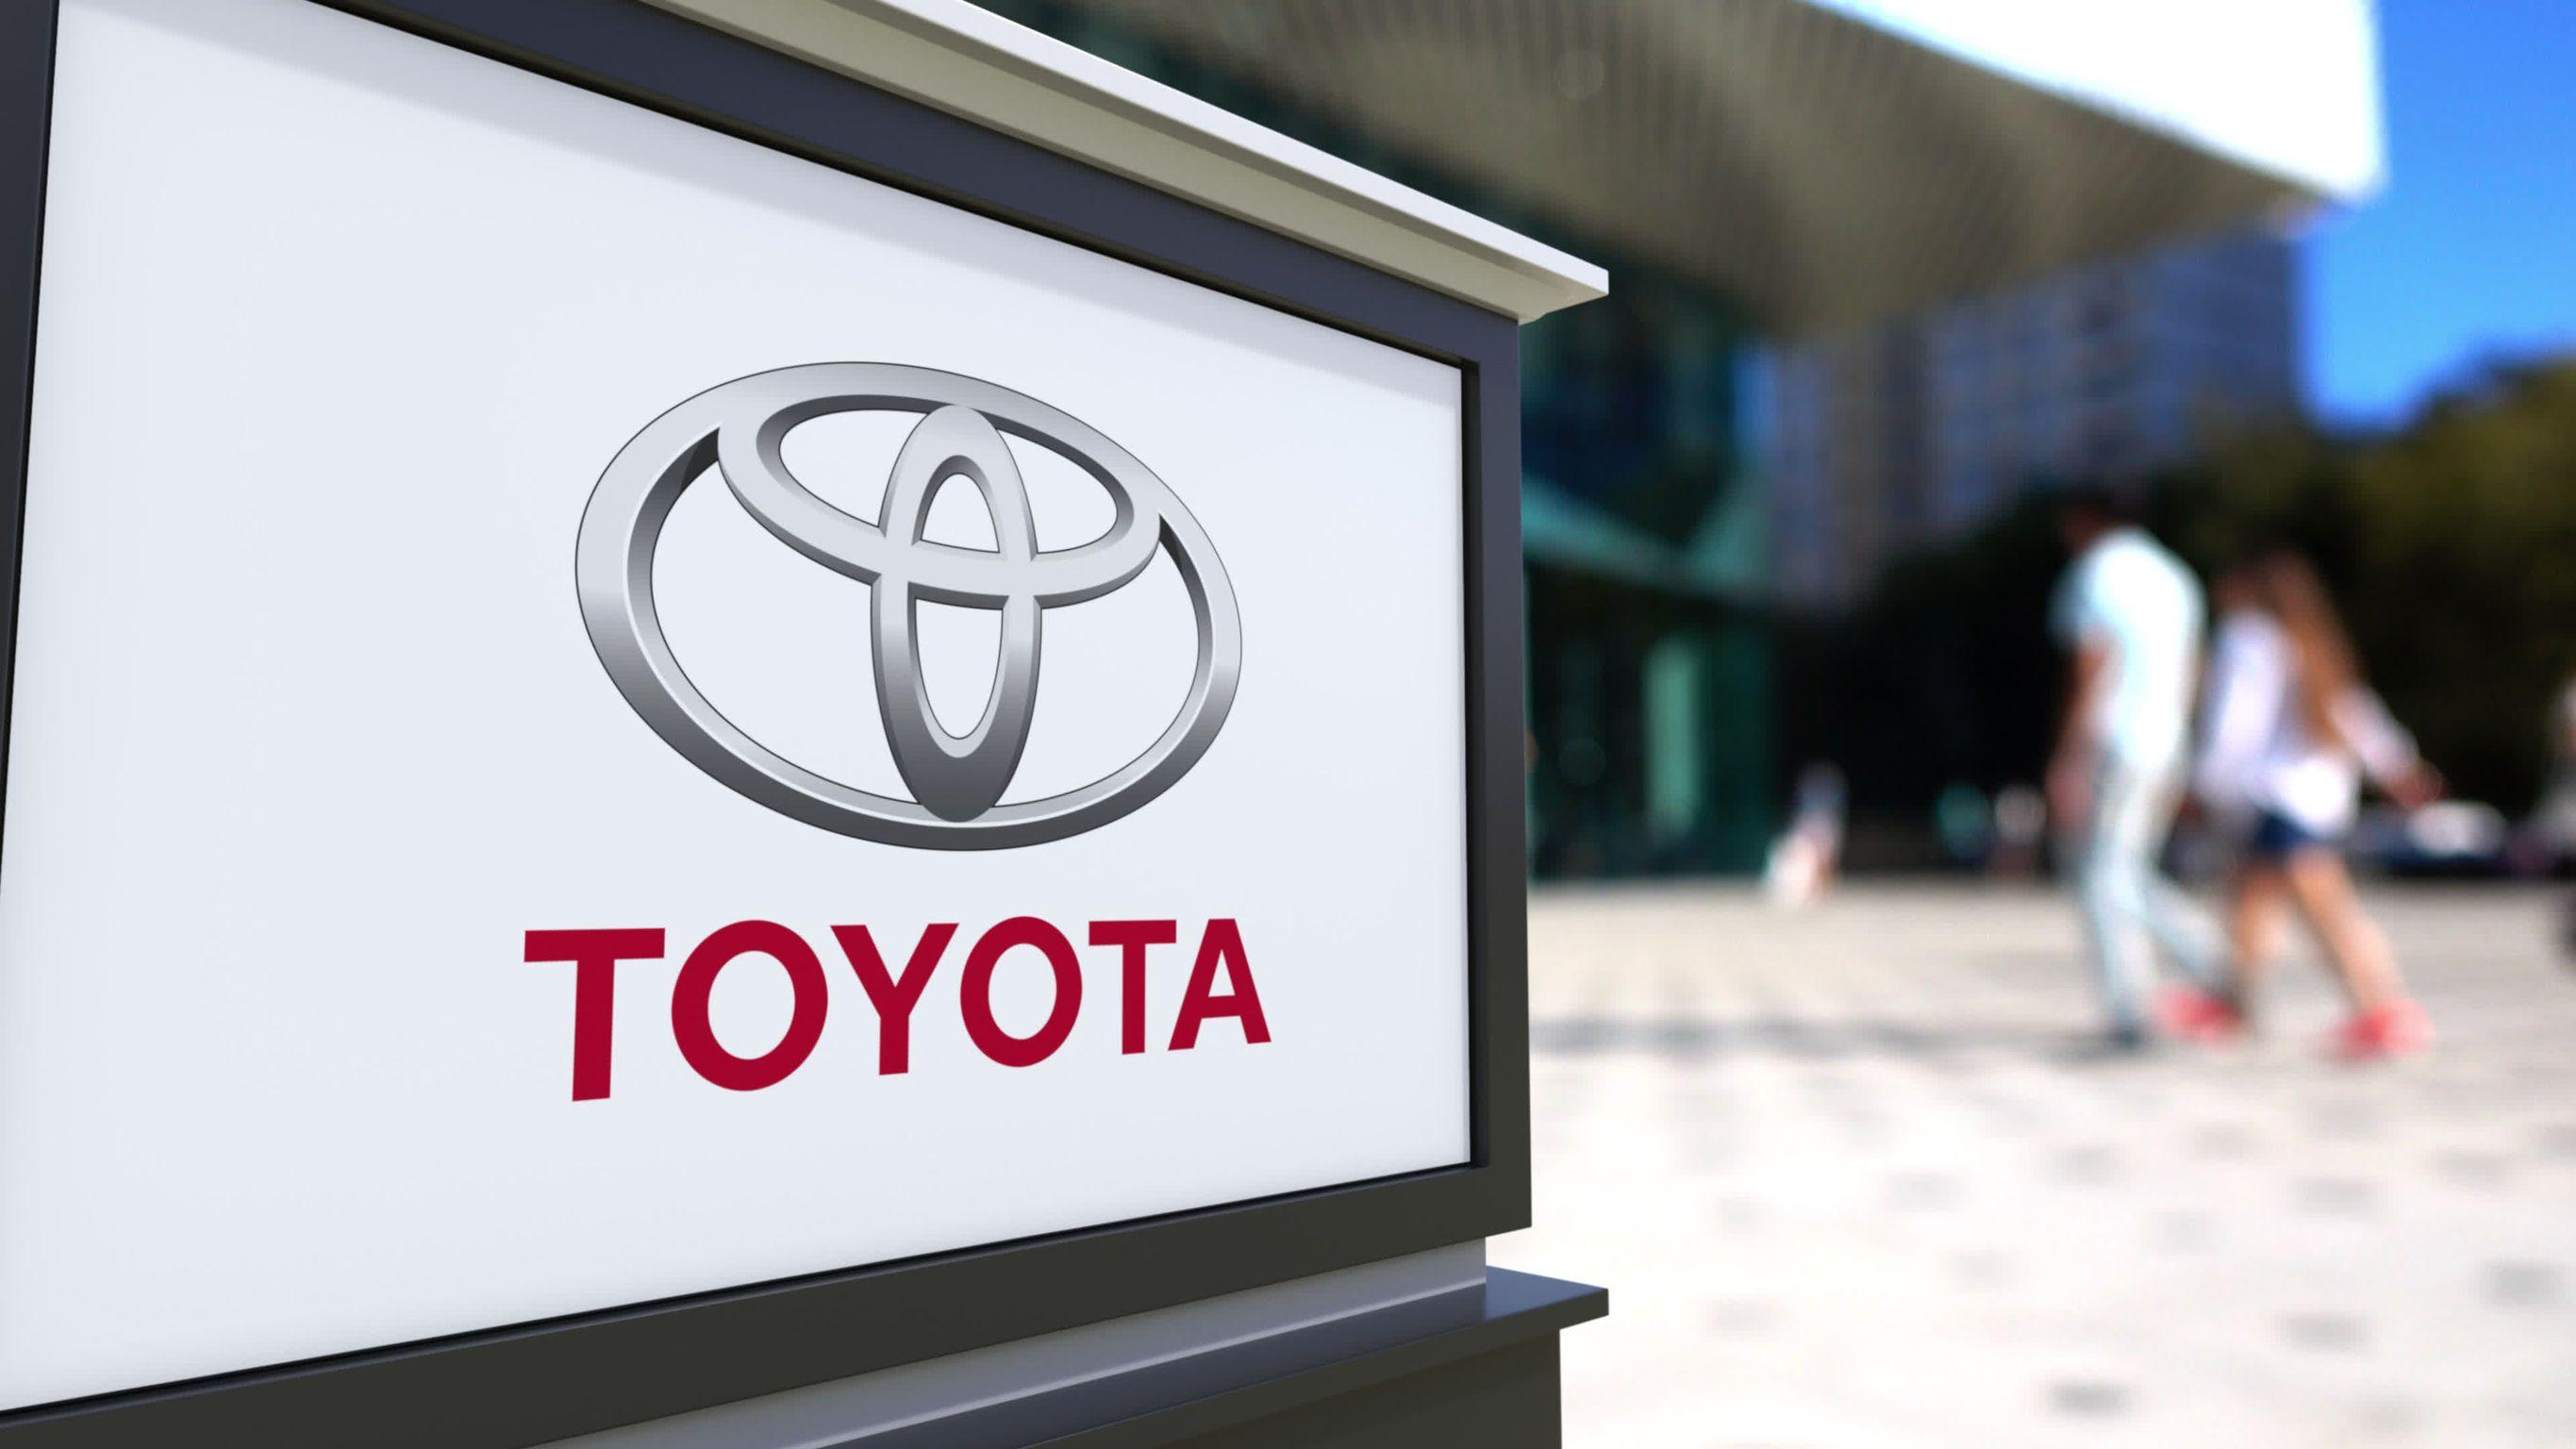 Toyota Kentucky Logo - Toyota announces $1.33 Billion investment in Kentucky plant. South